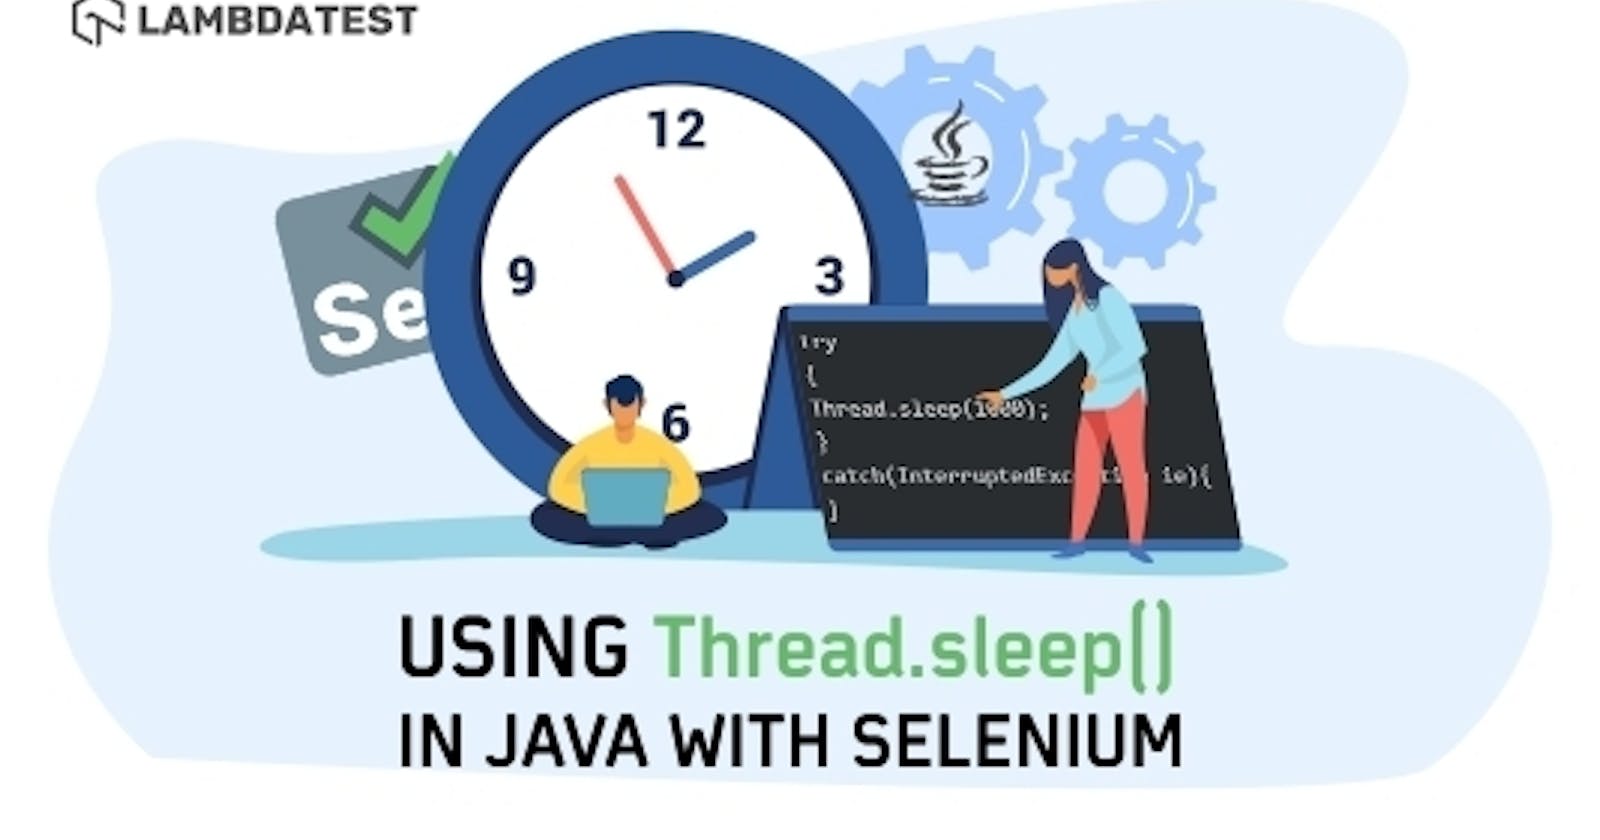 How To Use Thread.sleep() In Java With Selenium?